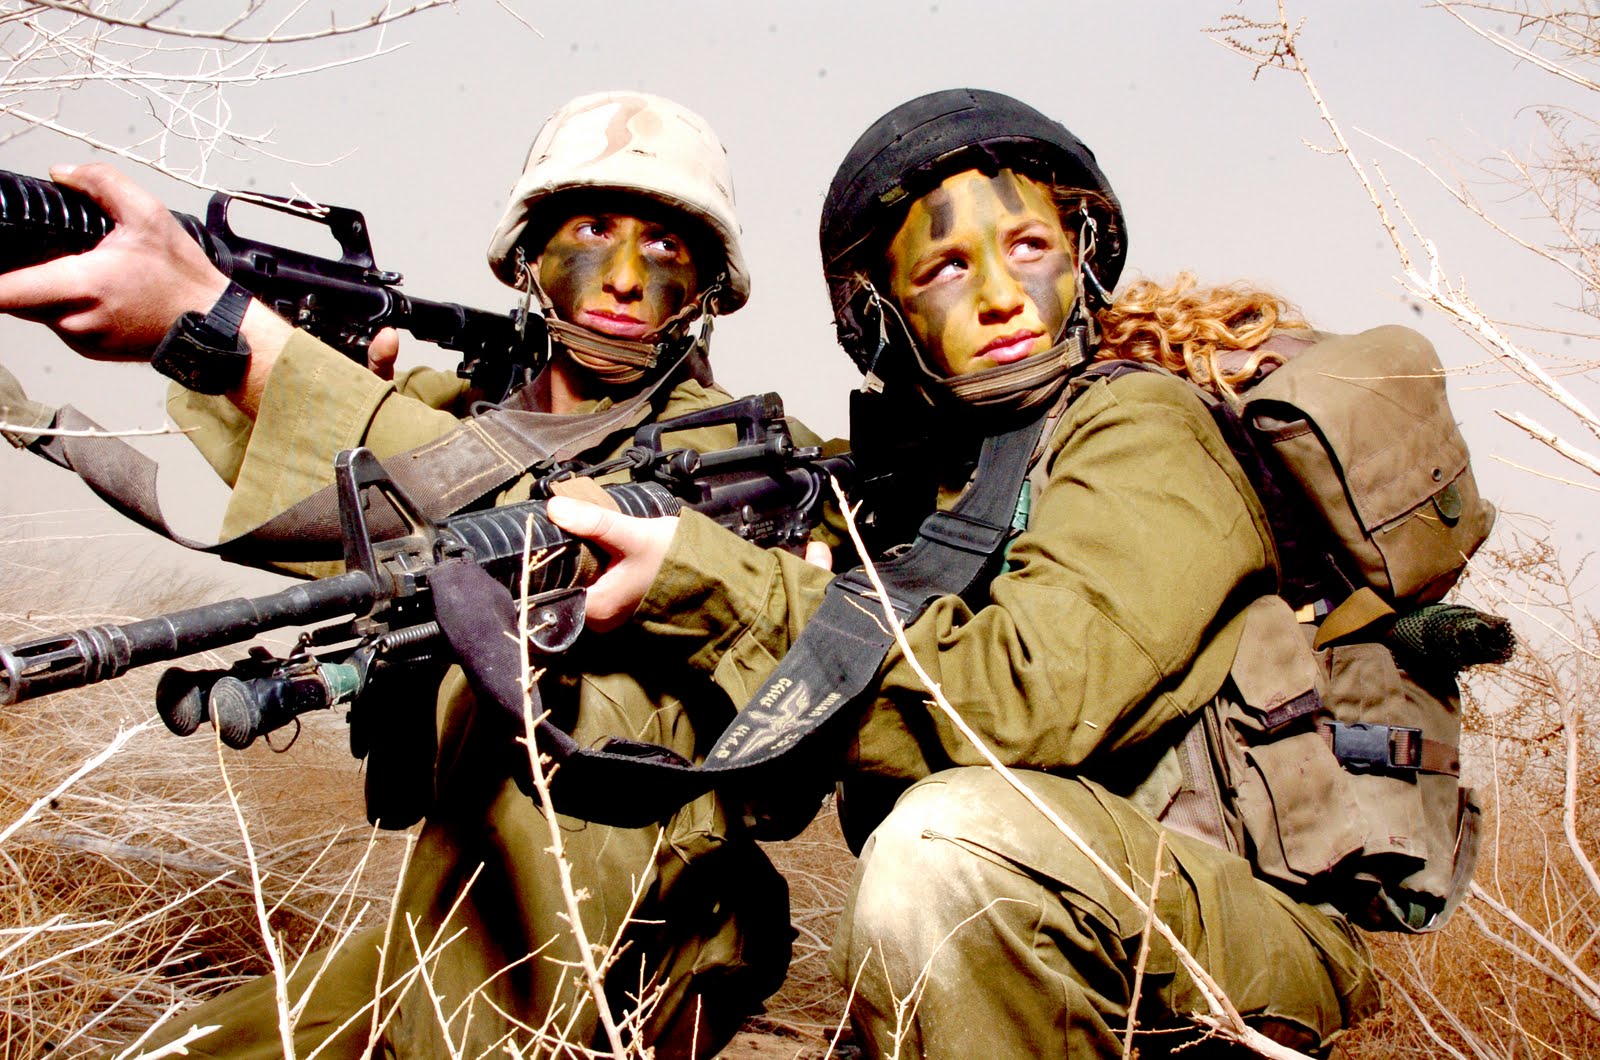 idf-spokesperson-woman-combat-soldier1.jpg